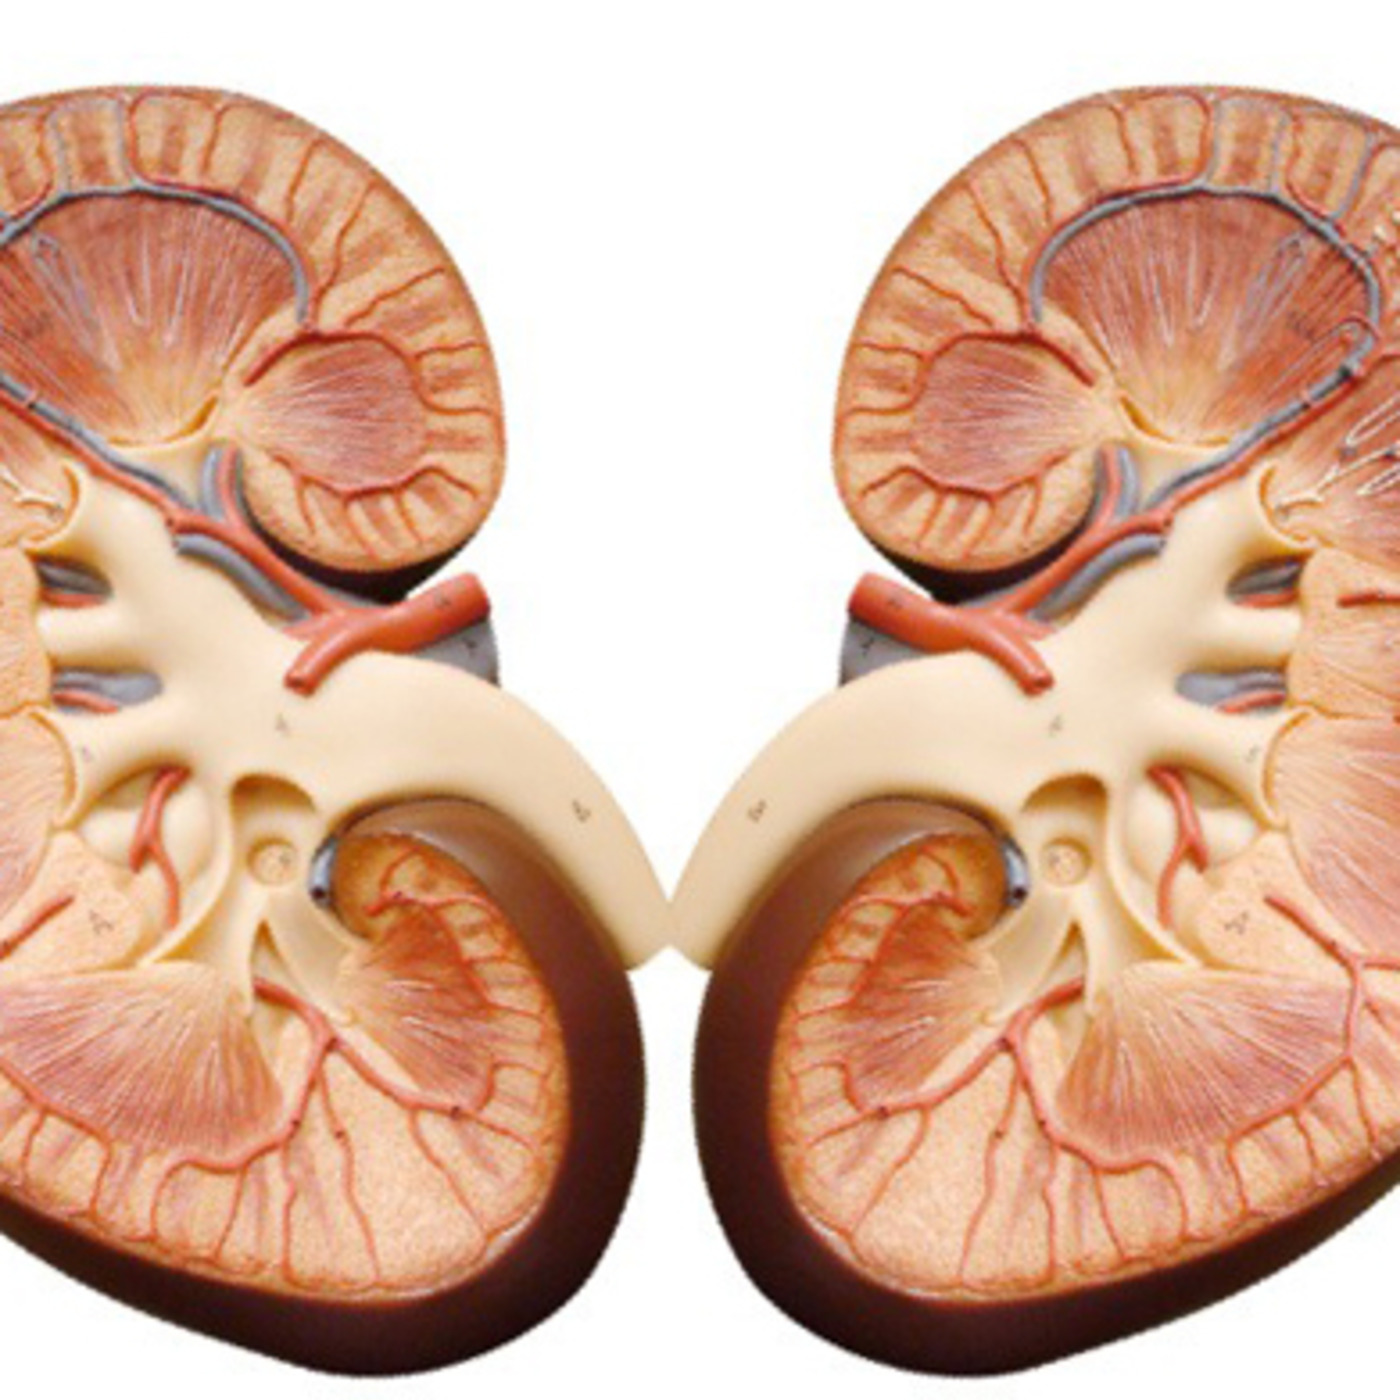 Kidneys - Small Size, Big Importance